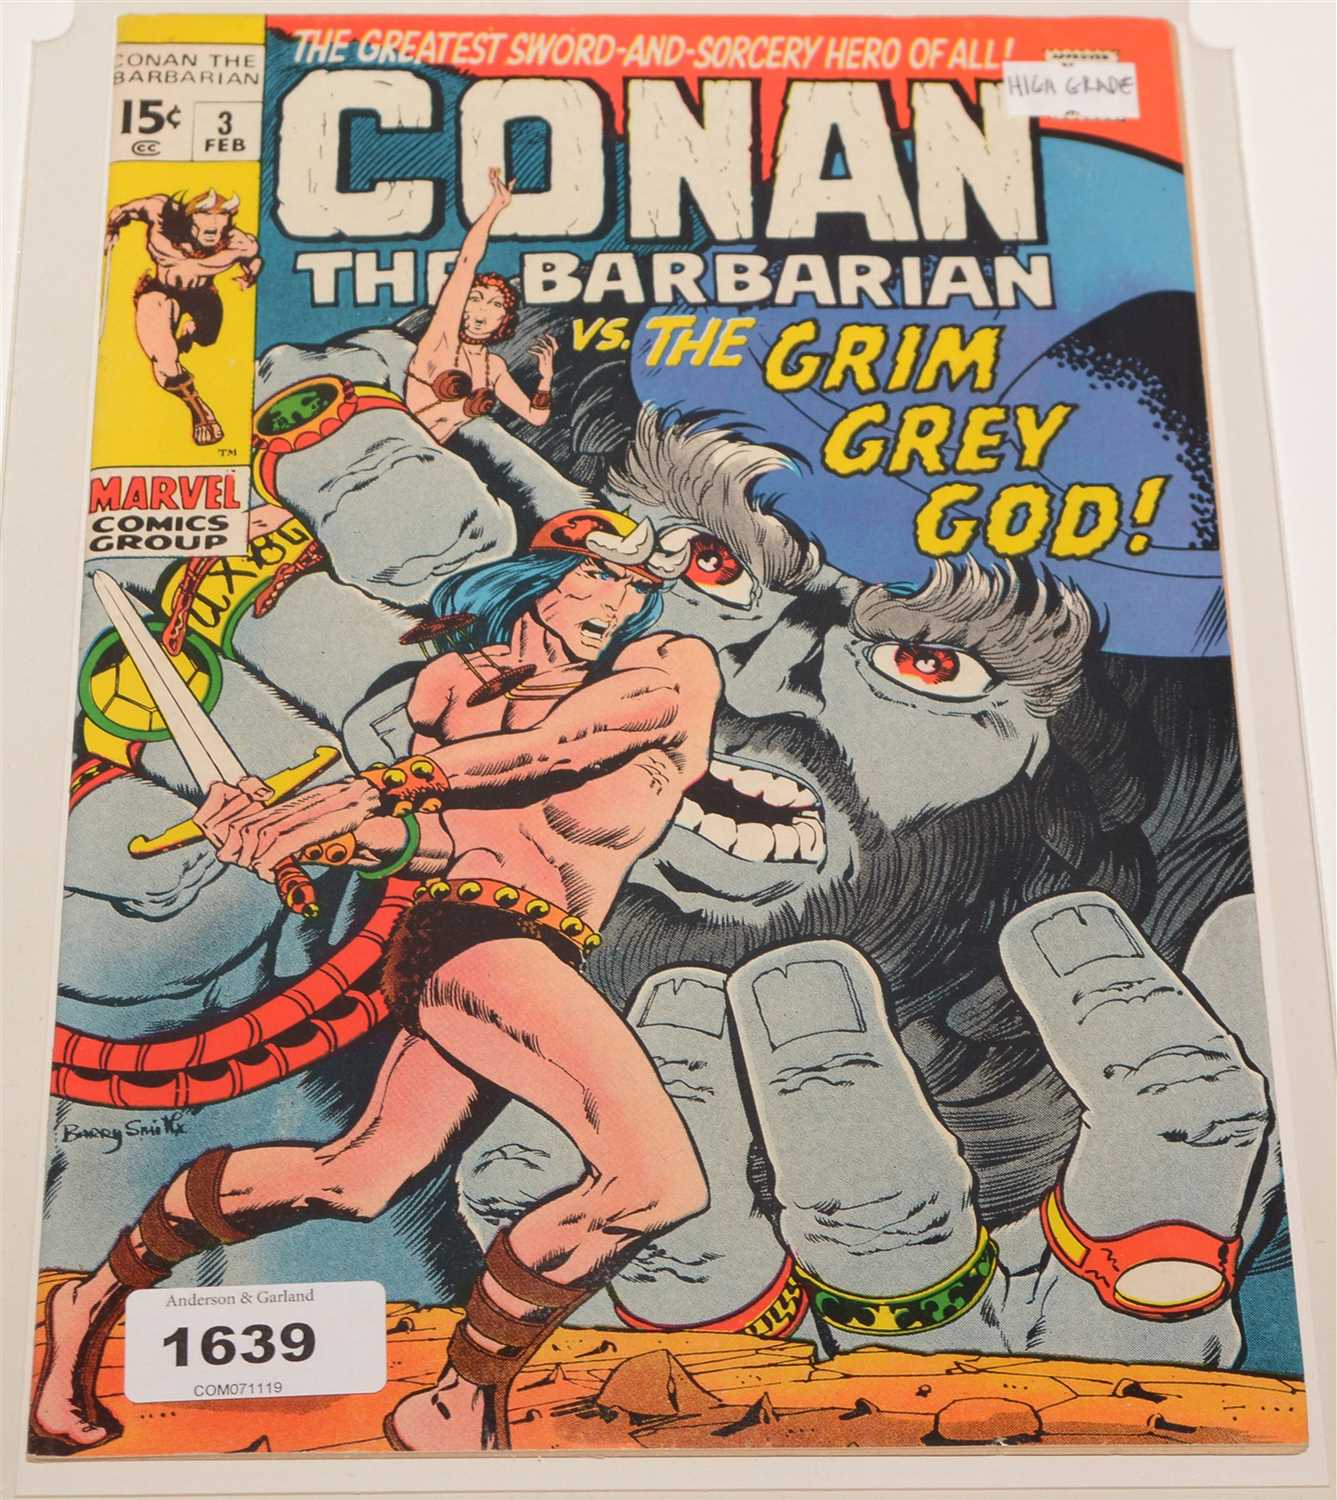 Lot 1639 - Conan Barbarian No. 3.